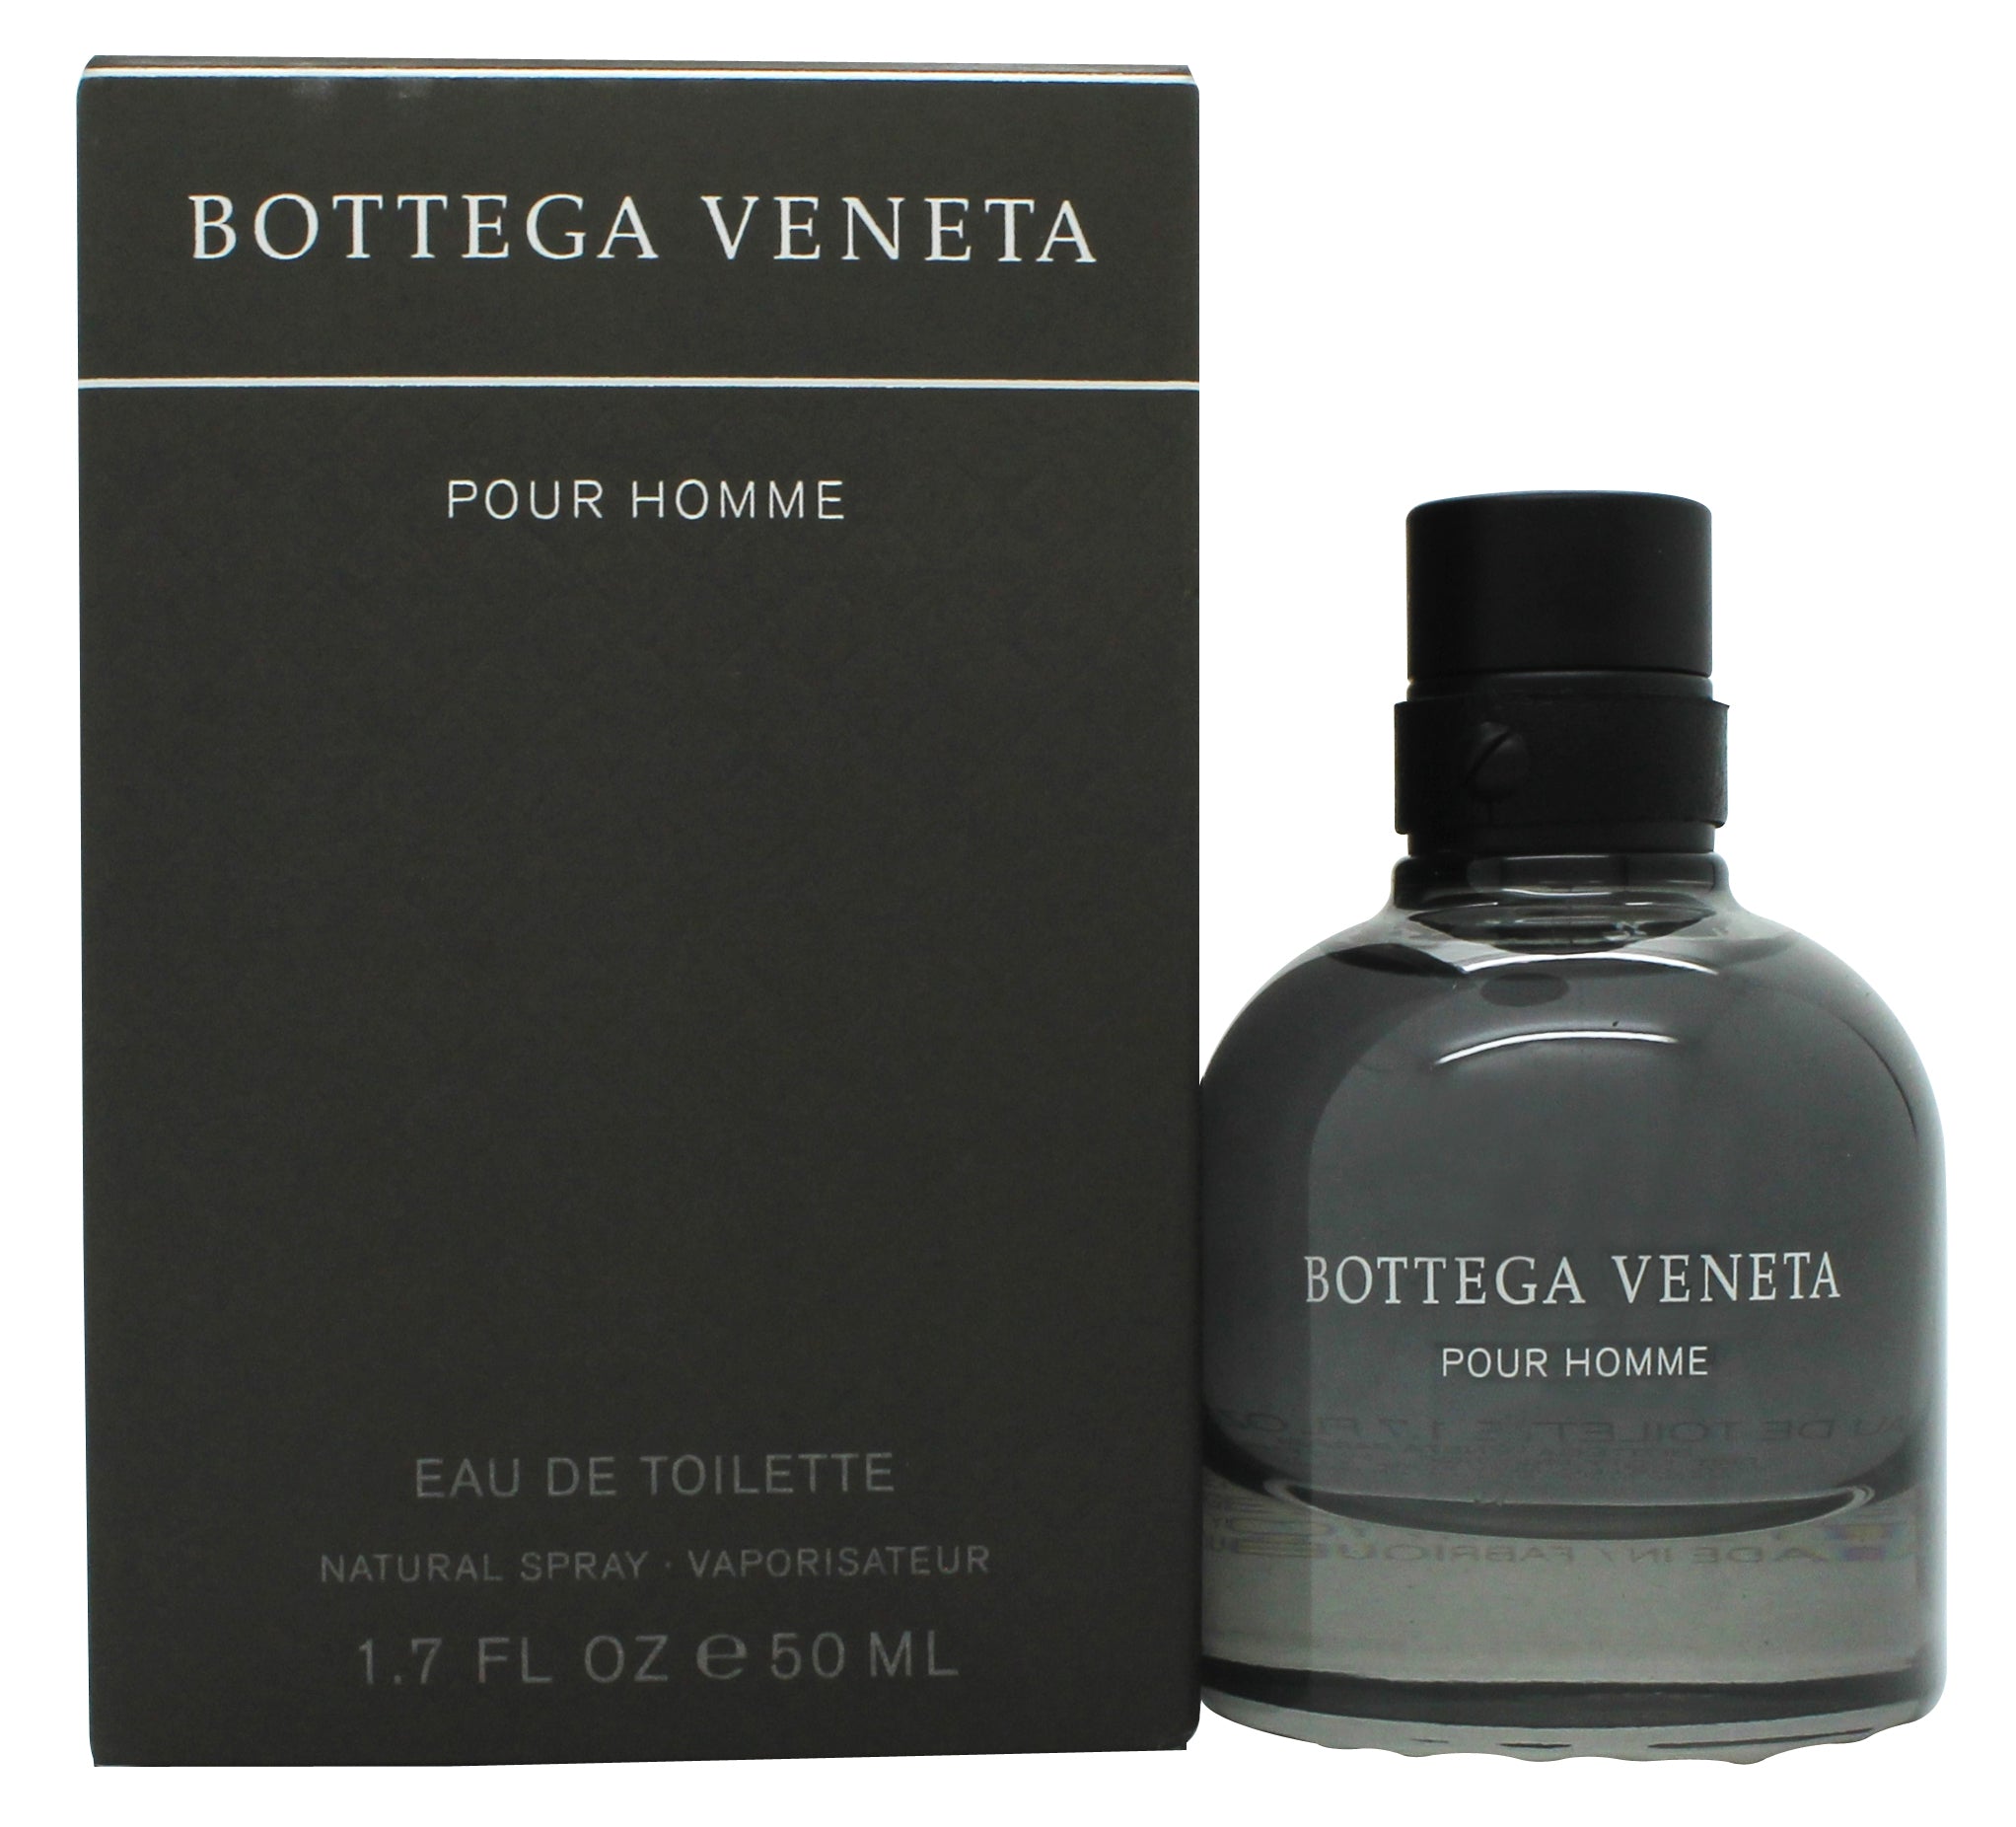 View Bottega Veneta Pour Homme Eau de Toilette 50ml Spray information